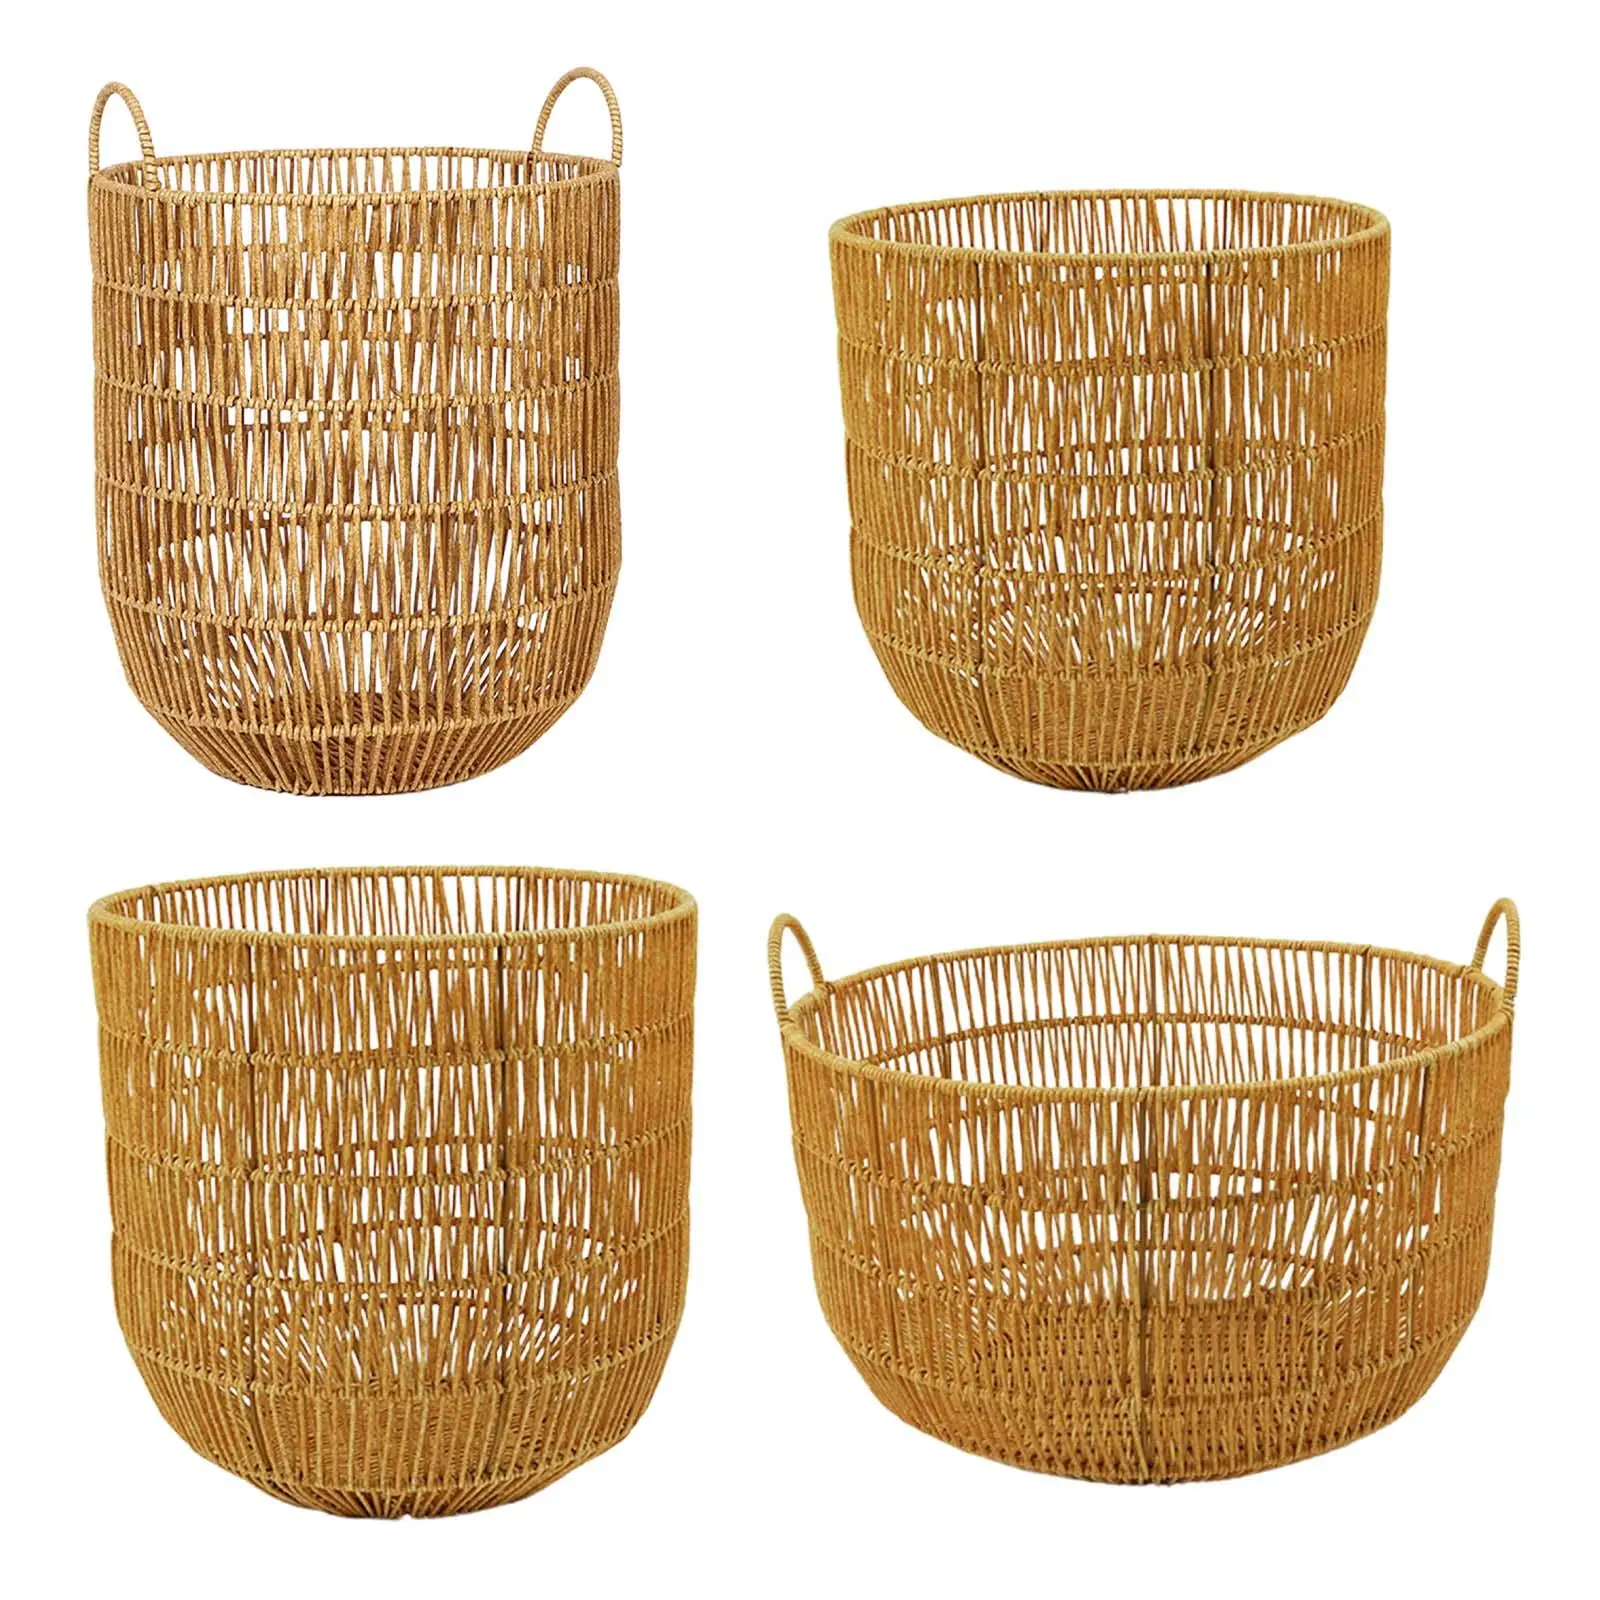 Wicker Baskets Woven Basket Toys Organizer Basket with Handle Laundry Hamper